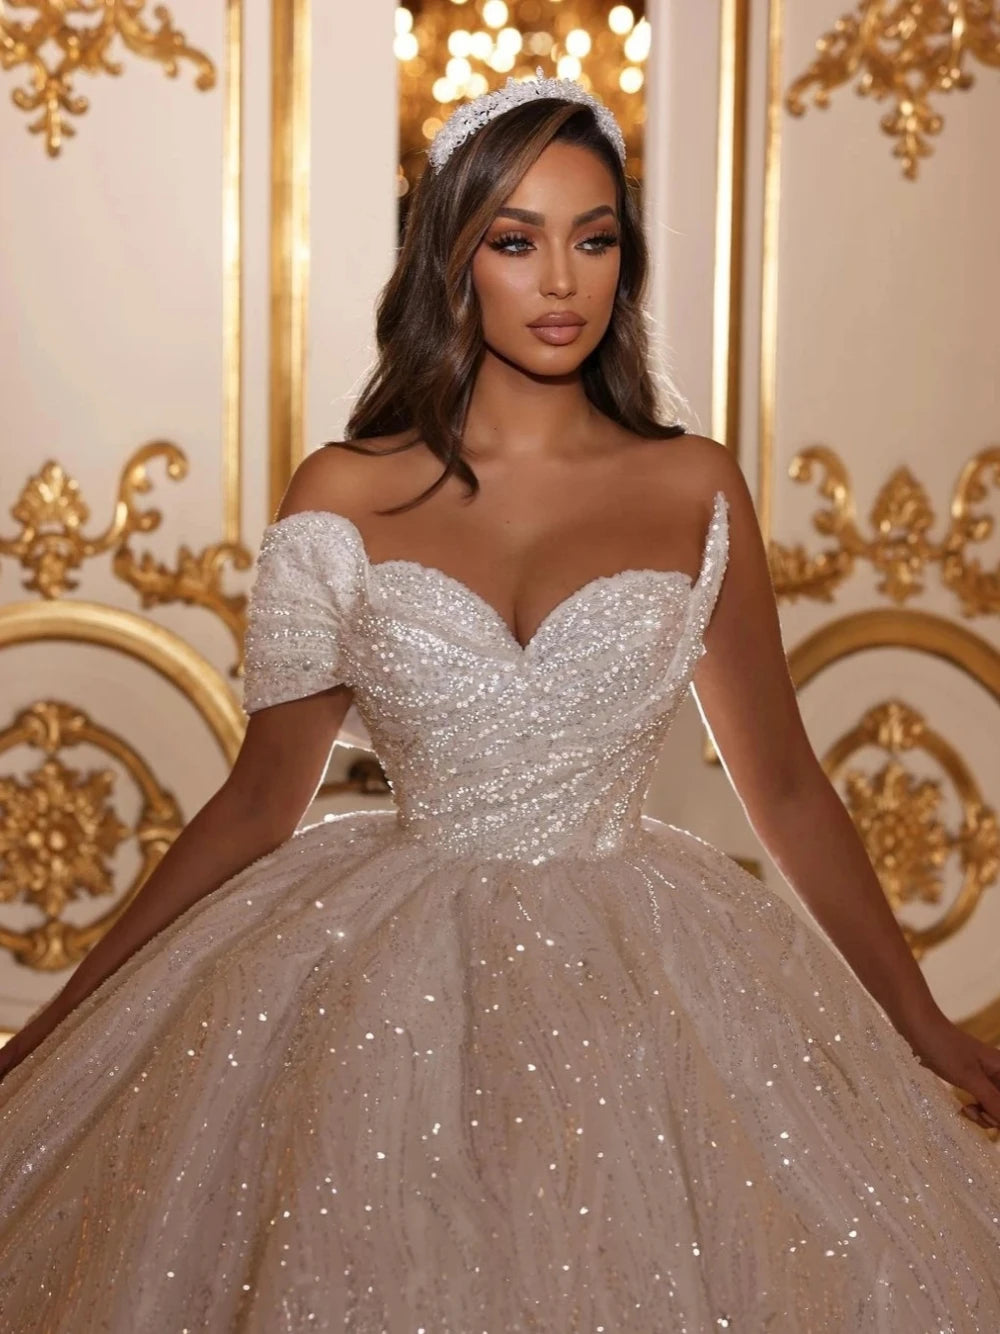 Robes de mariée élégante Couche en cœur perle la robe de bal de bal robe nuptiale des robes de mariée au sol brillantes vestidos de novia